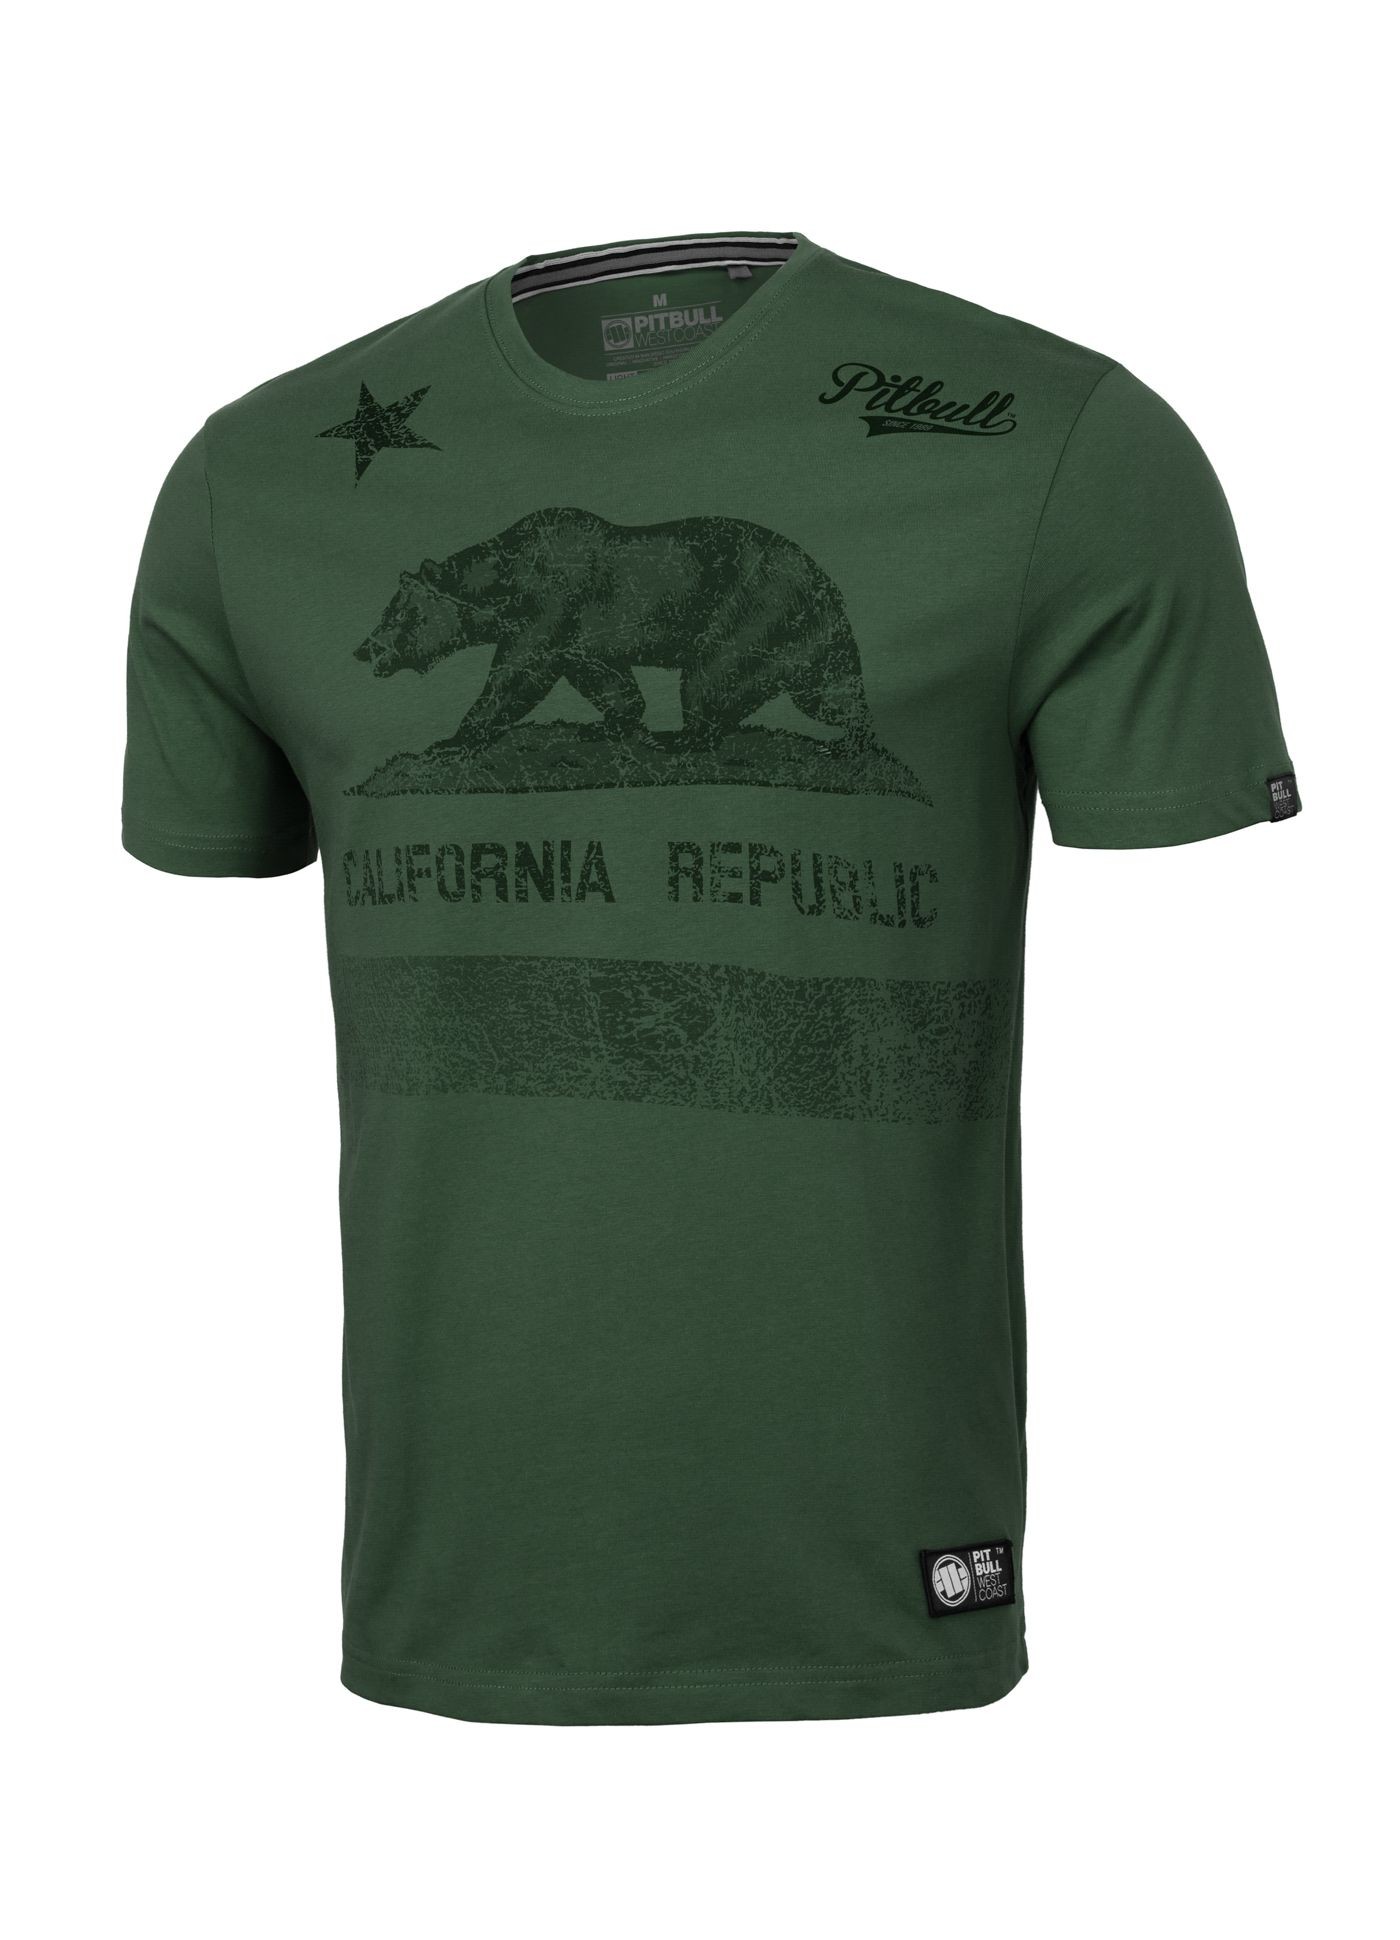 Pitbull West Coast - T-Shirt California